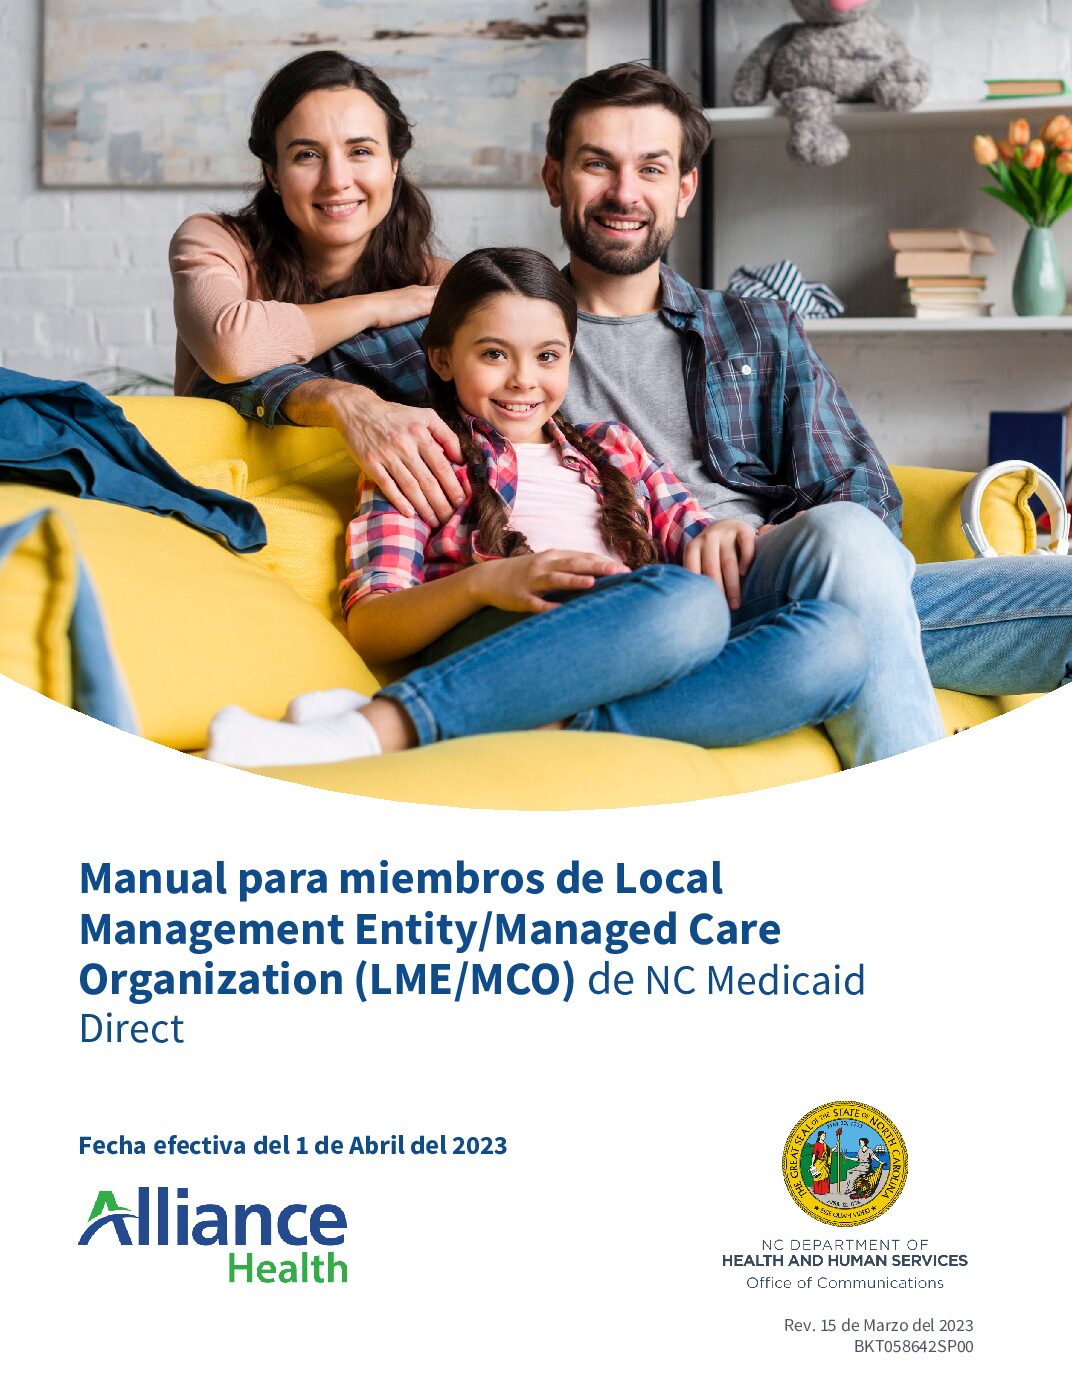 Manual para miembros de Local Management Entity/Managed Care Organization (LME/MCO) de NC Medicaid Direct